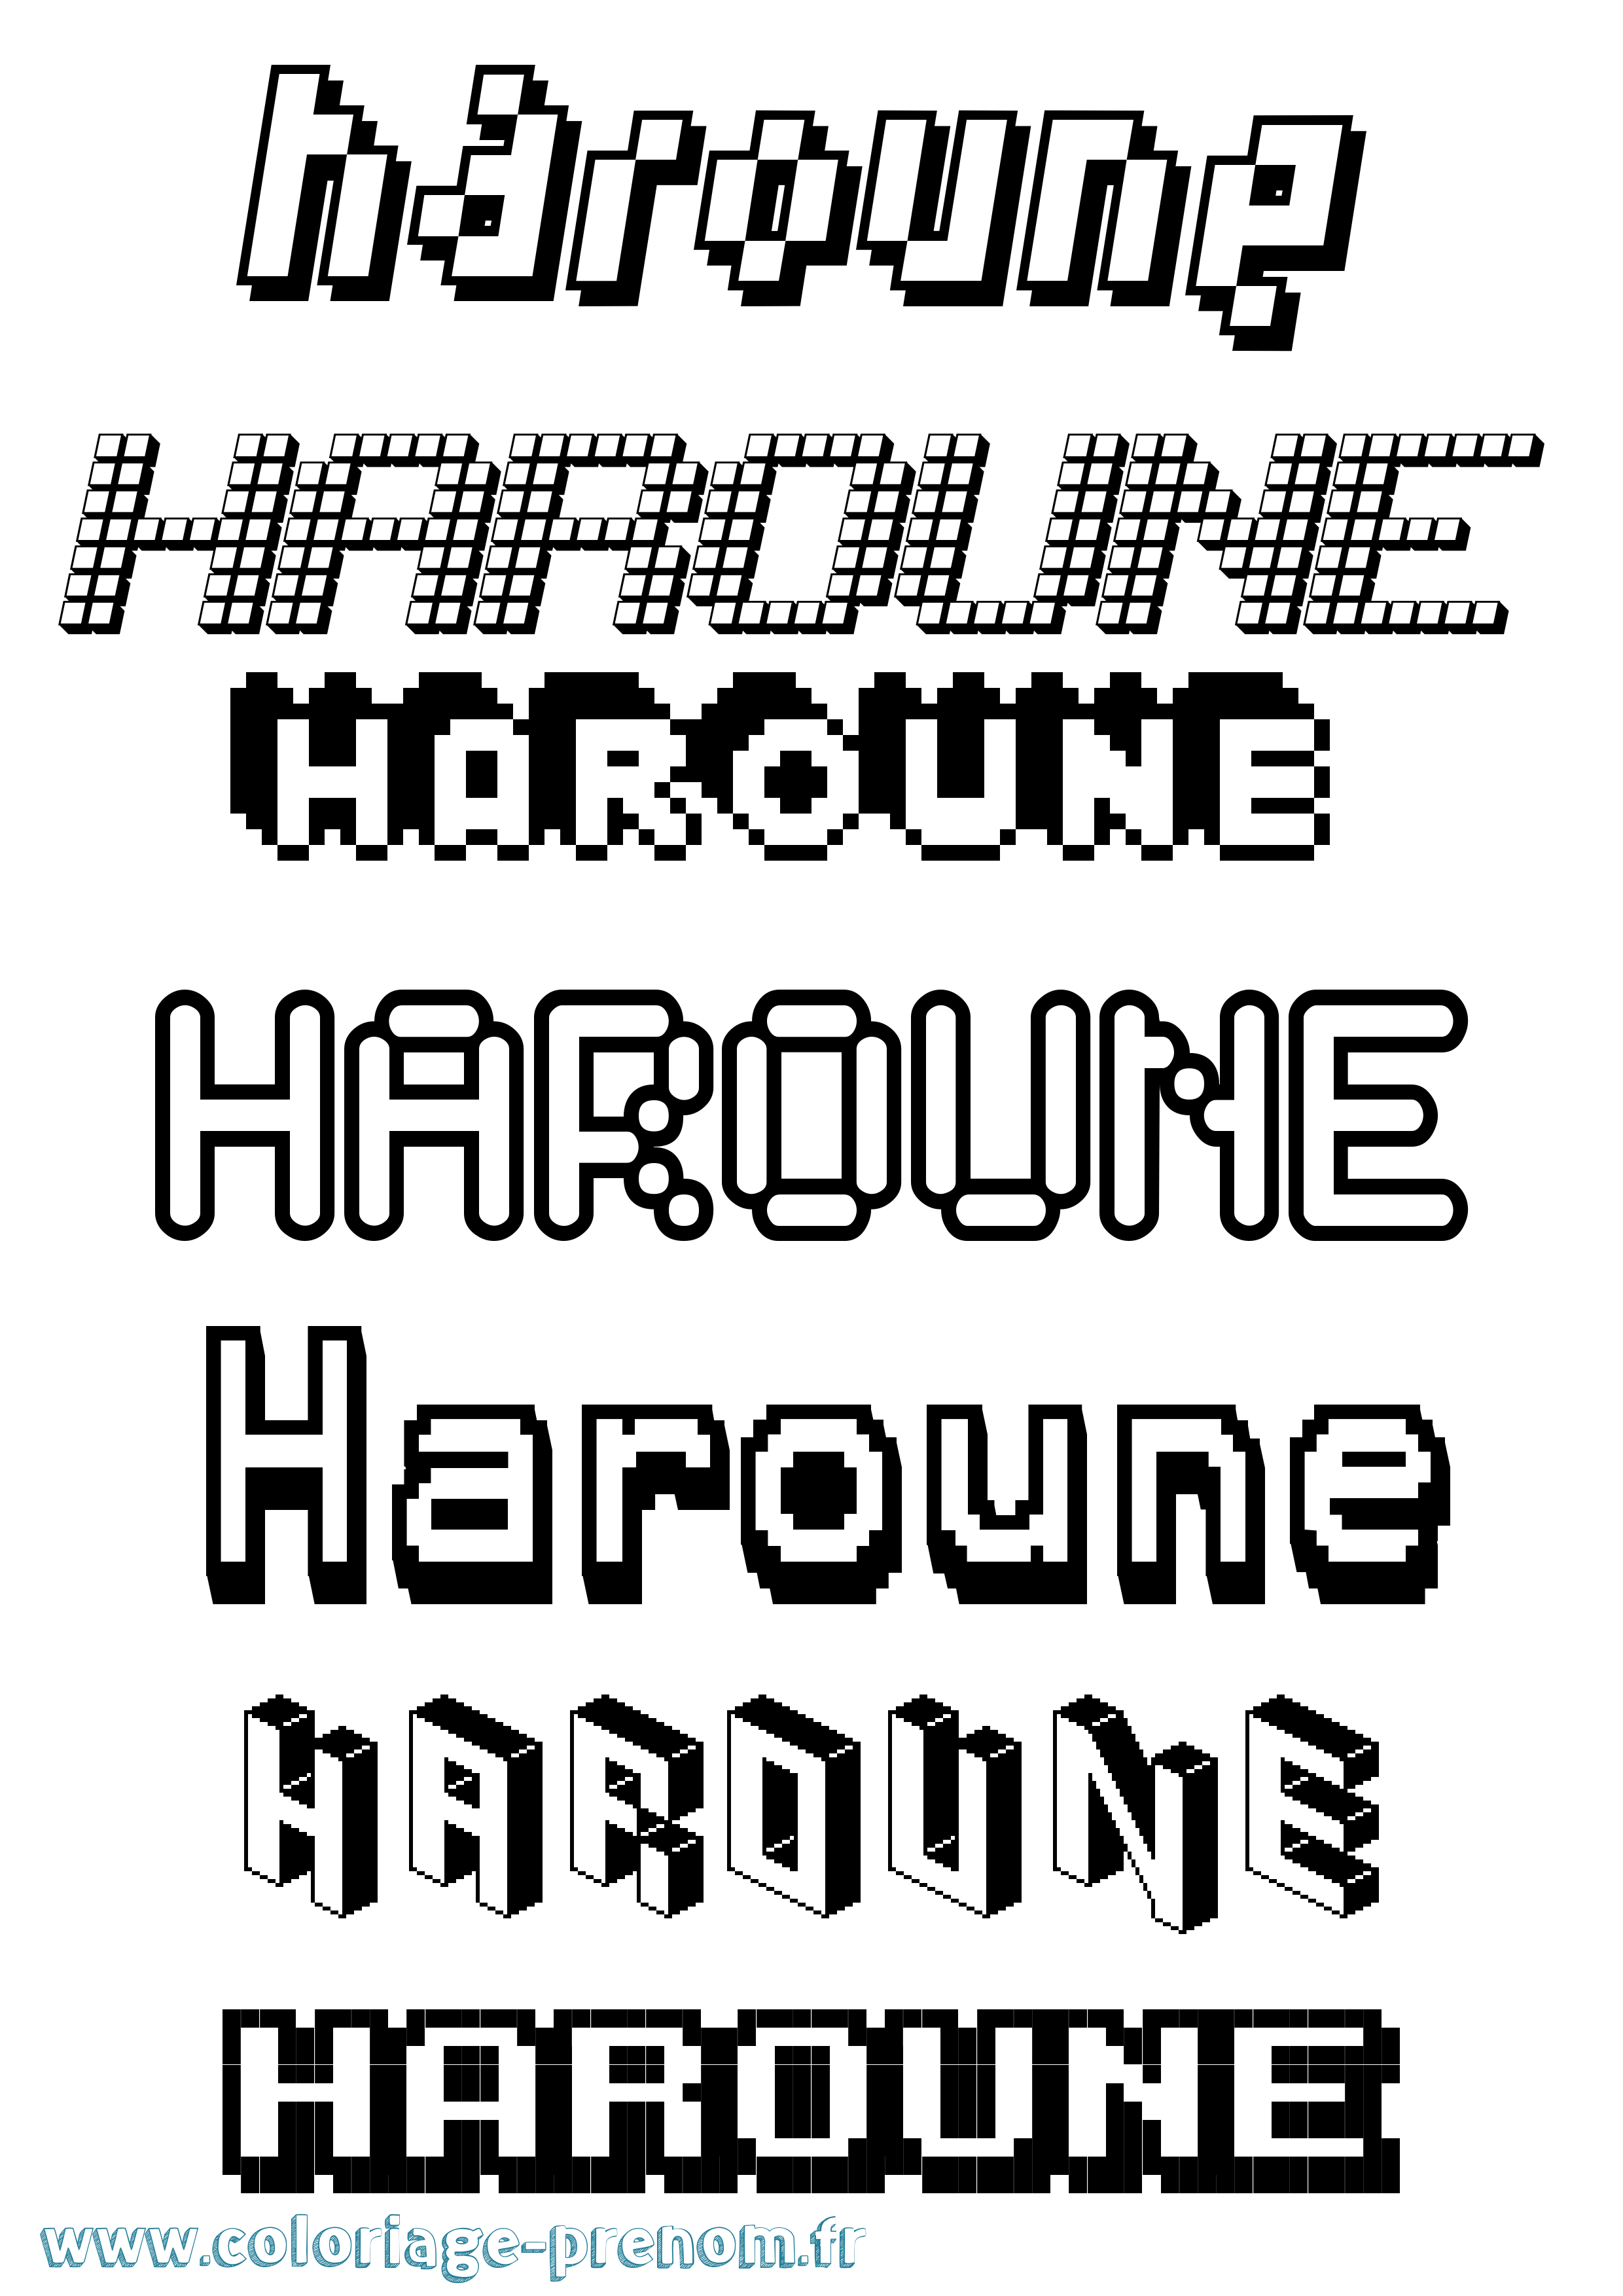 Coloriage prénom Haroune Pixel